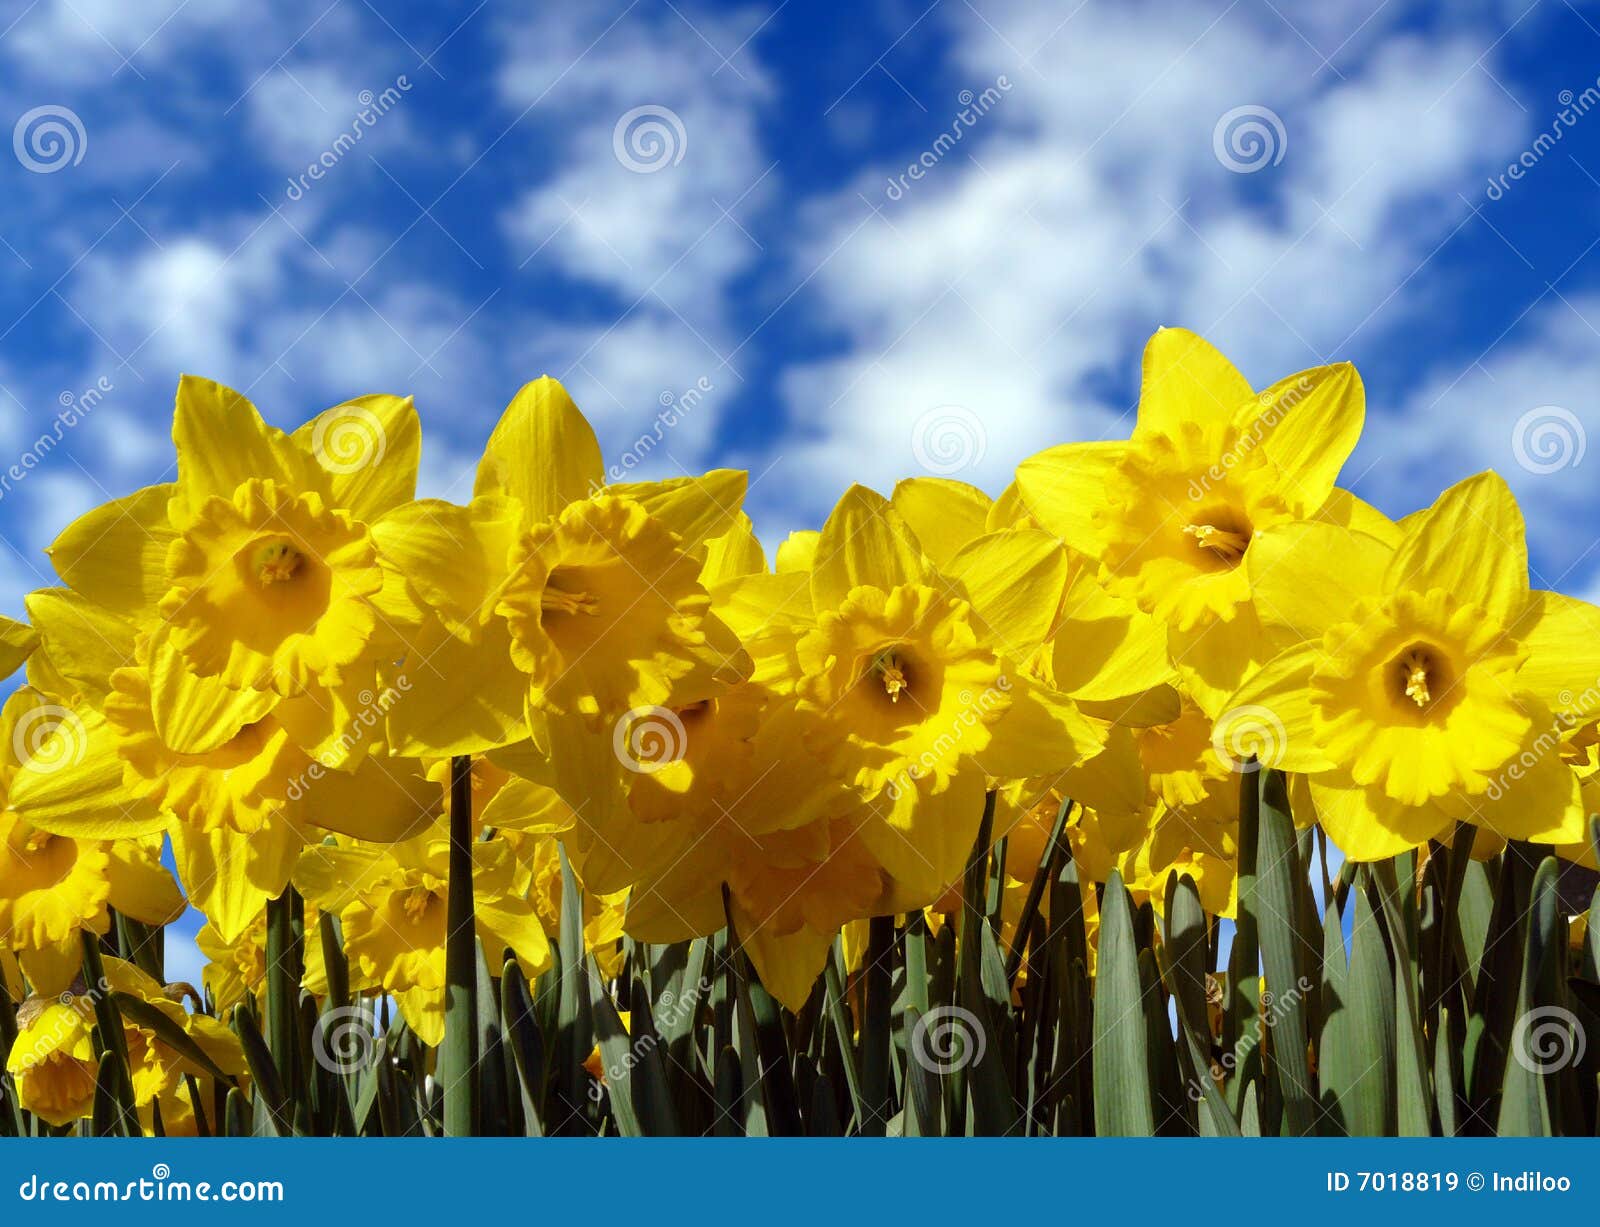 yellow daffodils and sky